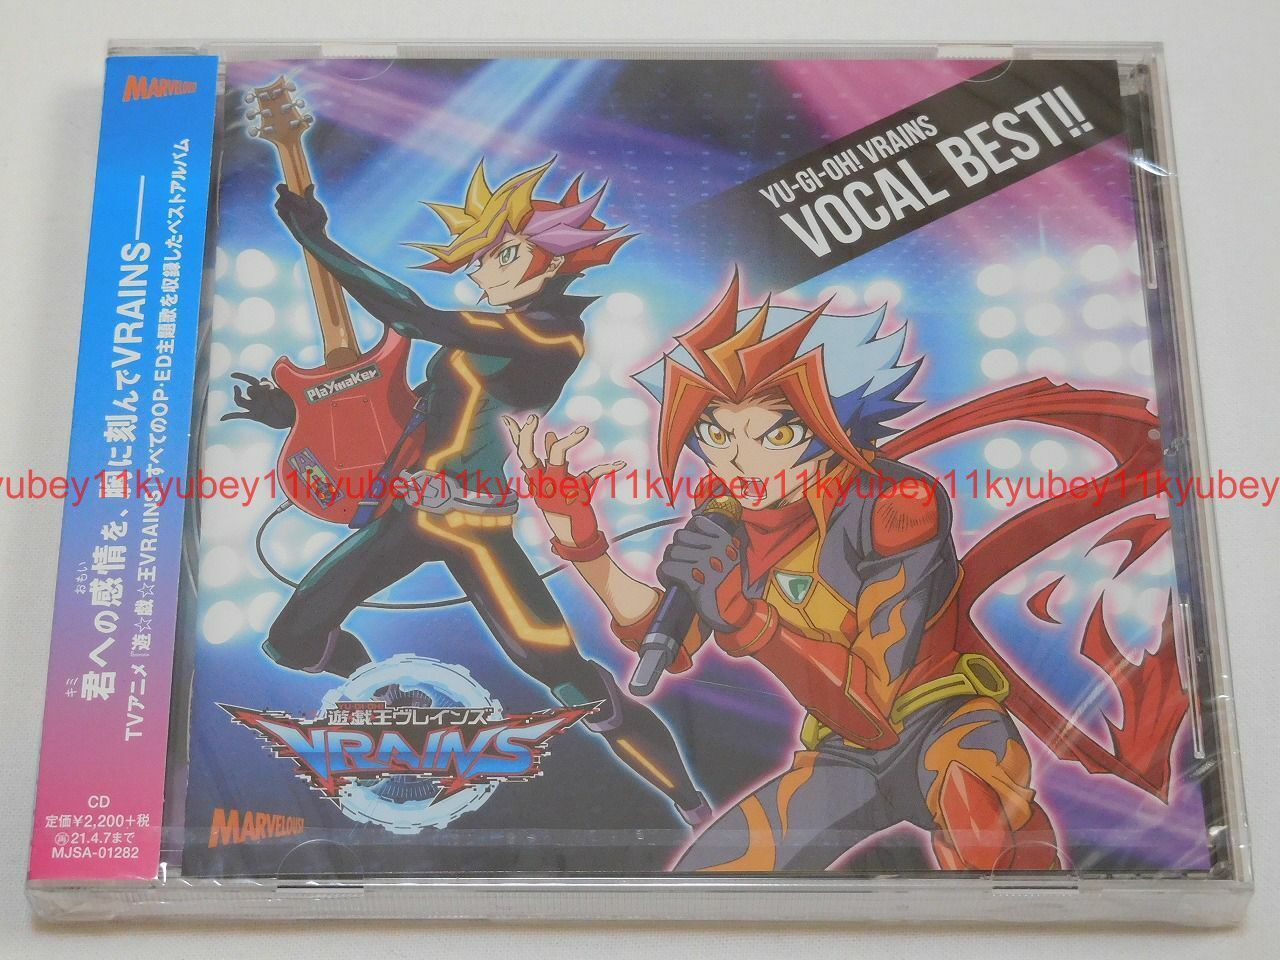 New YU-GI-OH VRAINS VOCAL BEST CD Japan MJSA-01282 4535506012821